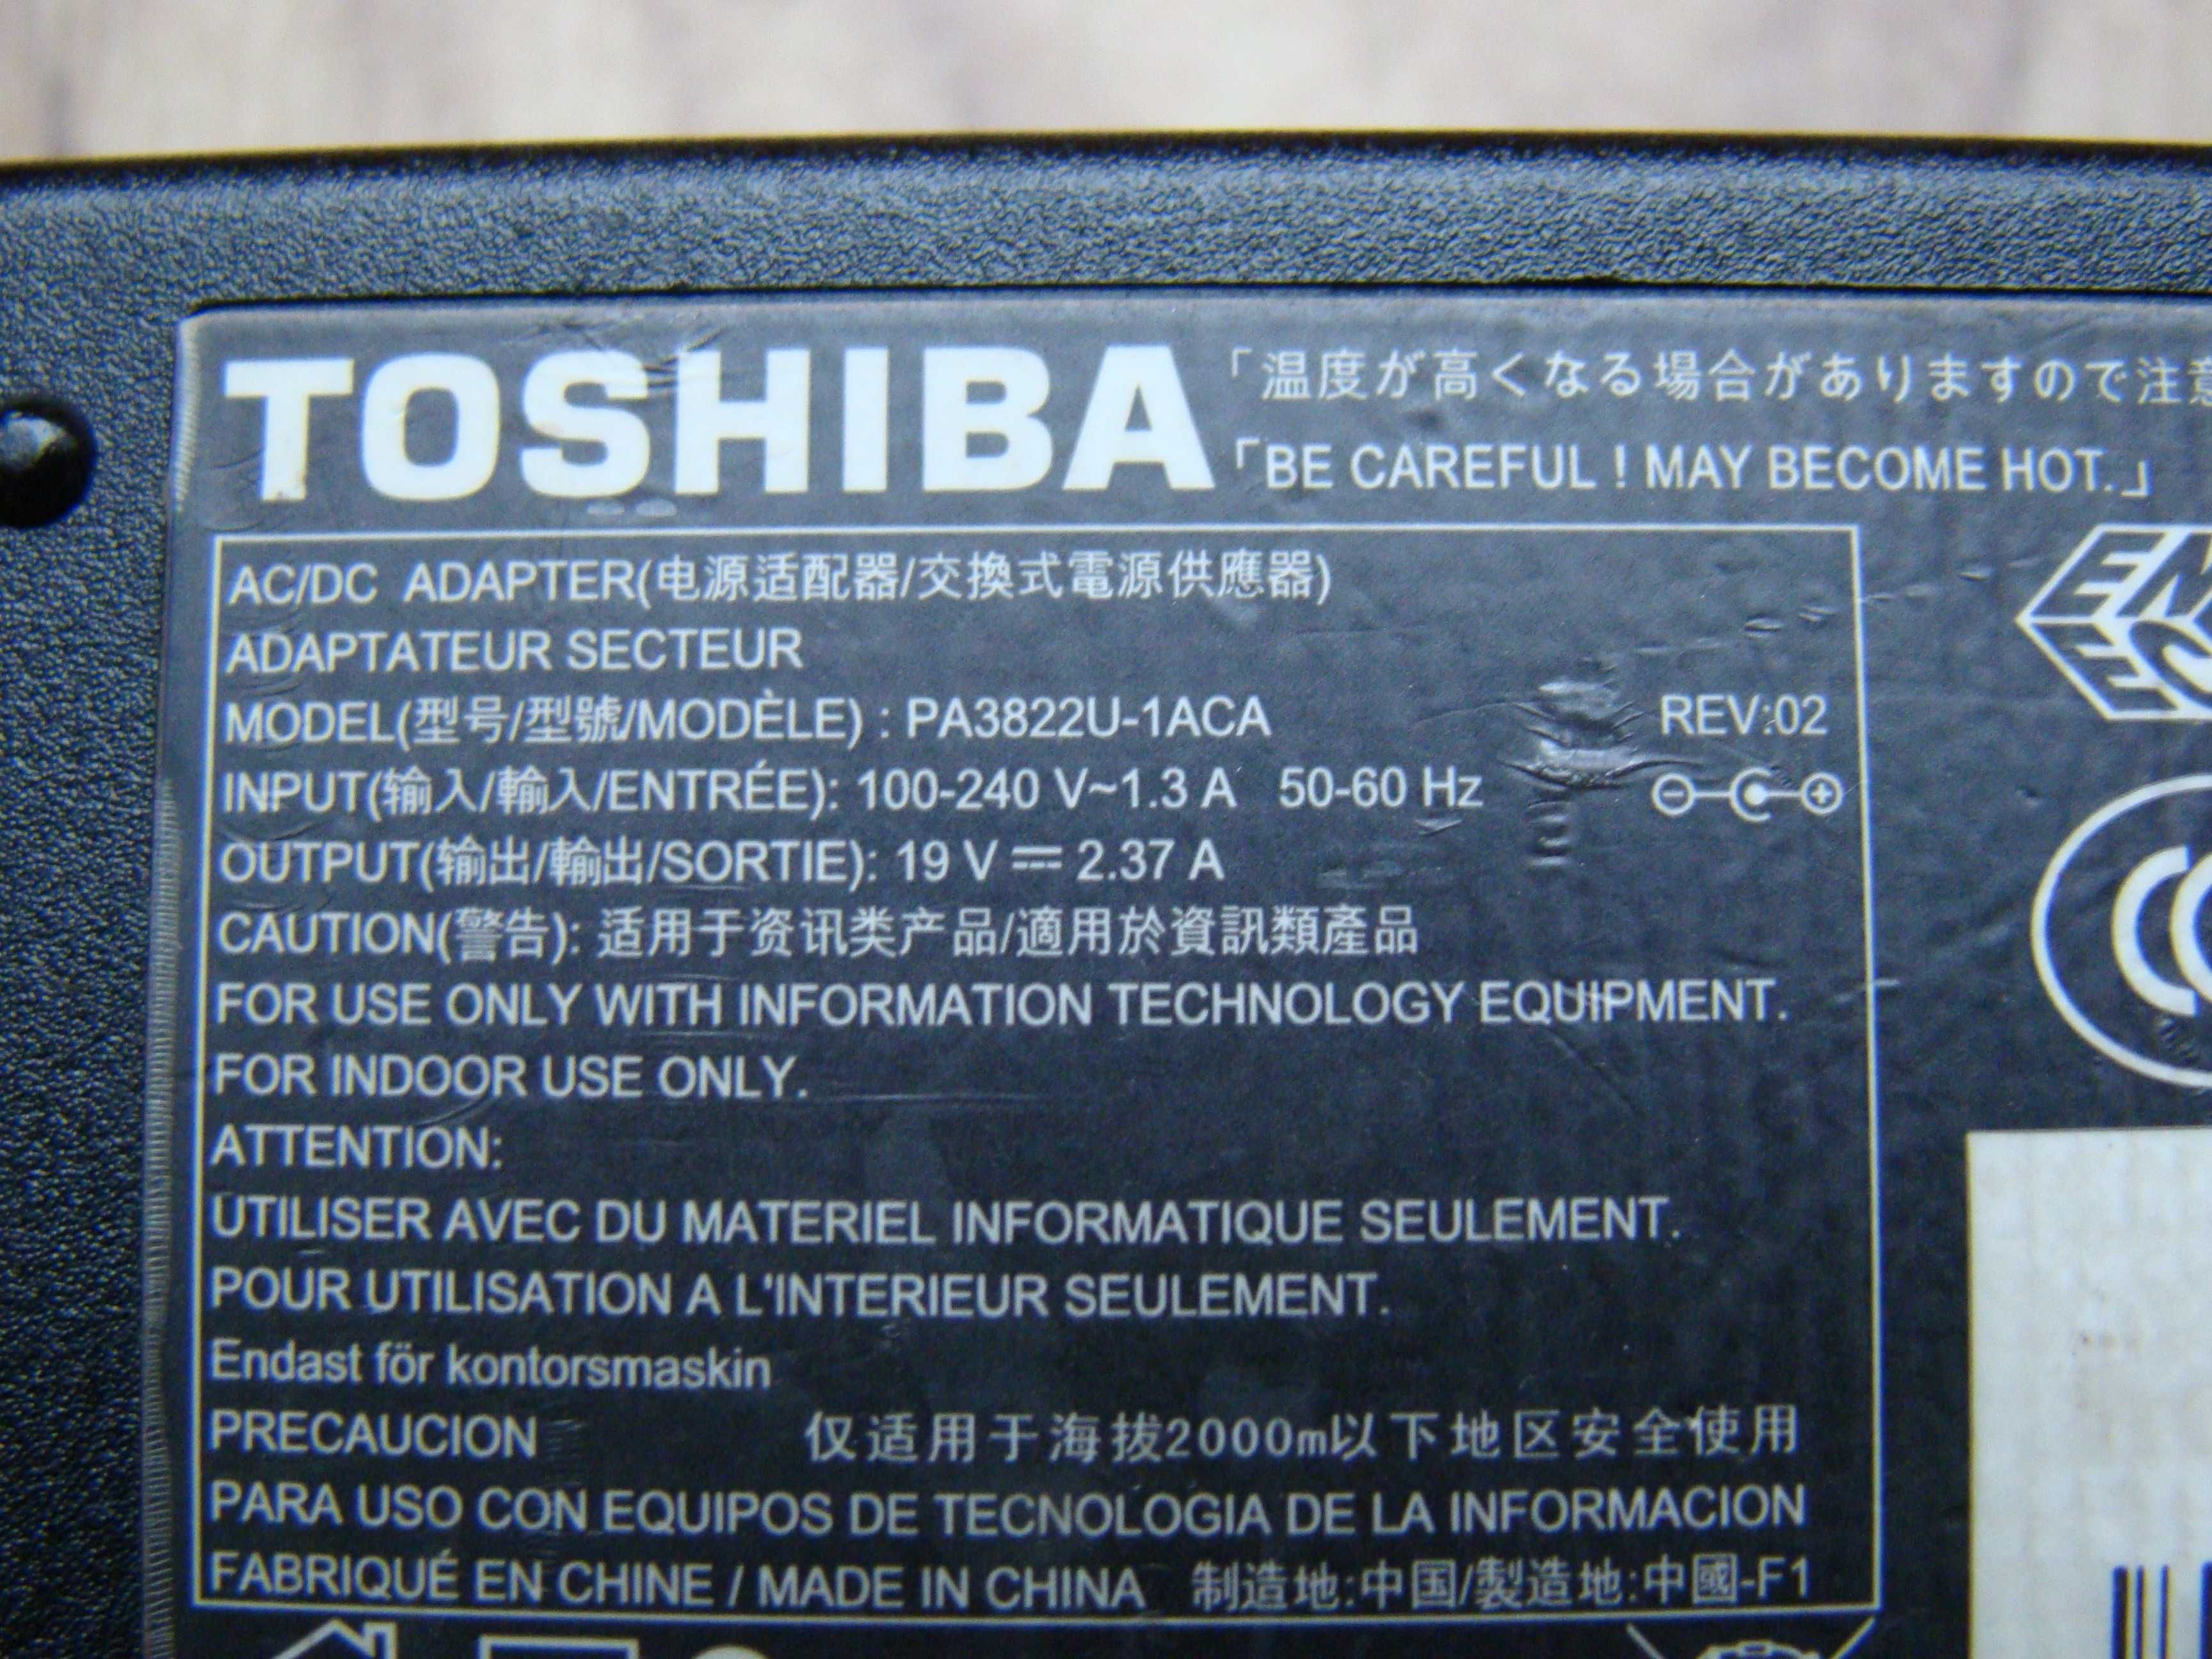 Ładowarka Toshiba model PA3822U-1ACA